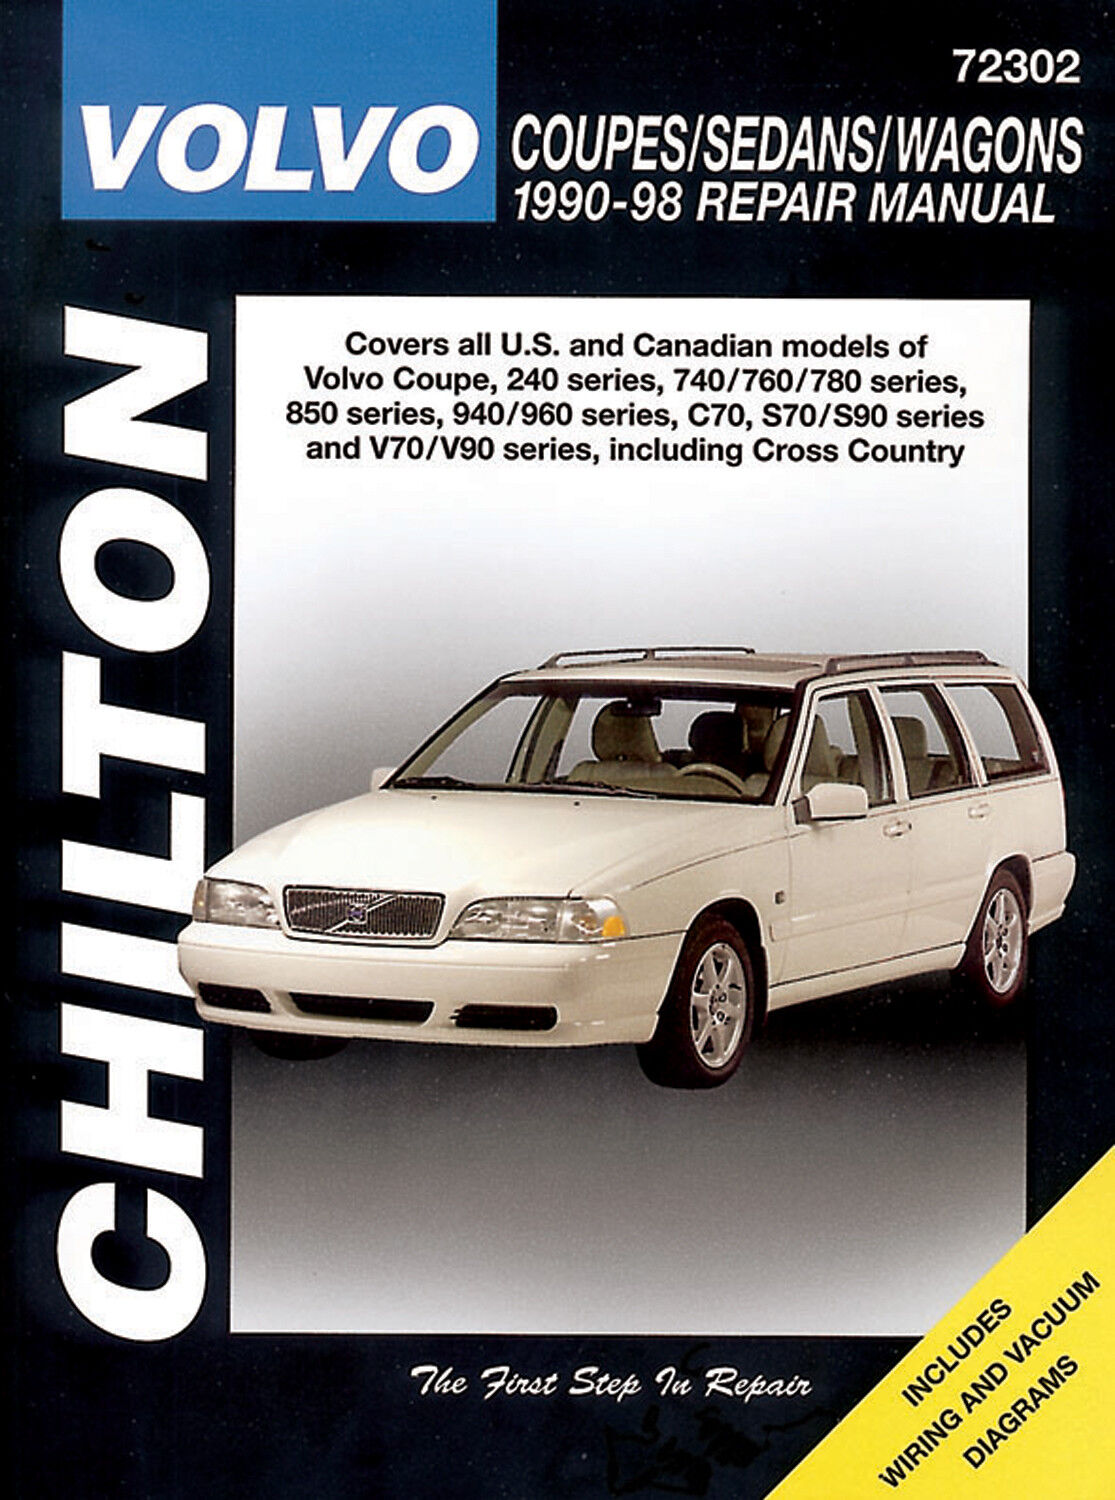 72302 New Chilton Repair Manual Volvo Coupes,Sedans,Wagons 1990-98  